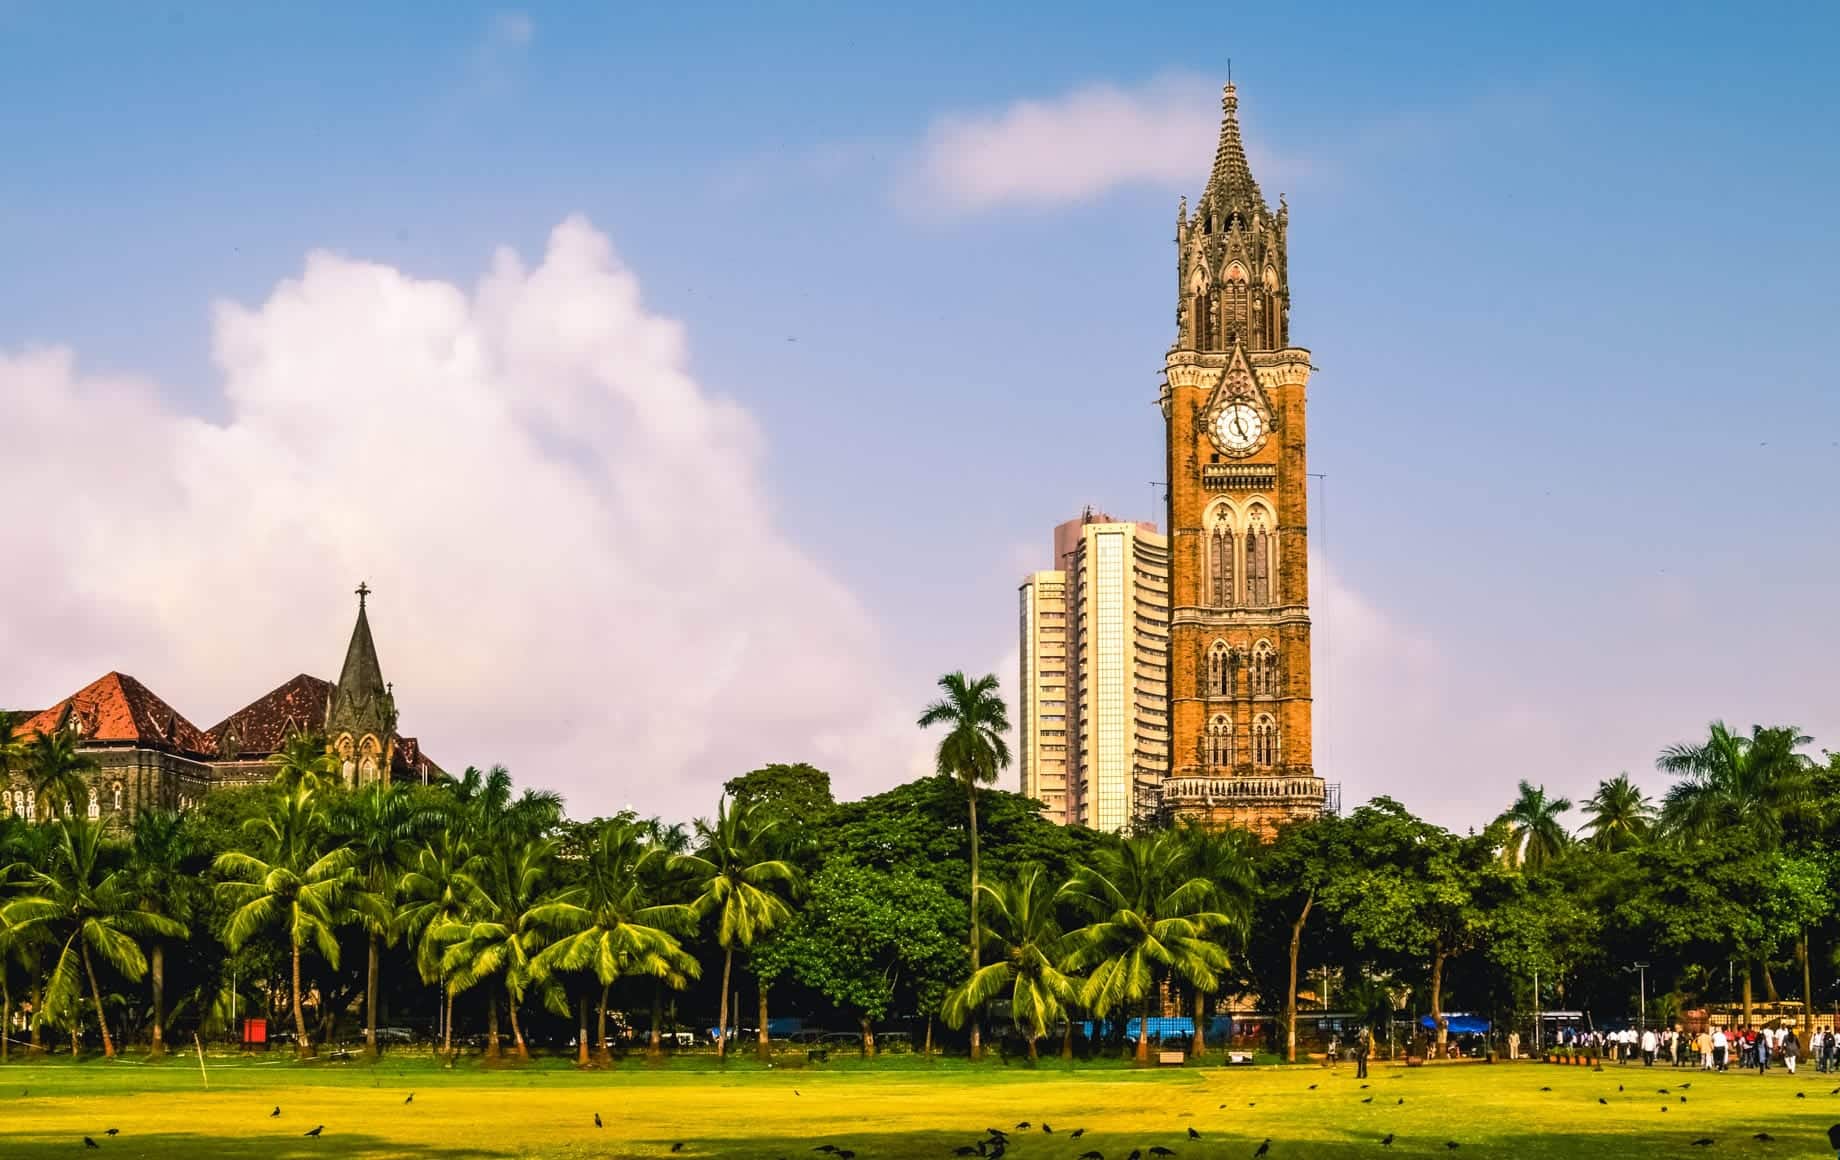 Peaceful park and tower at Mumbai